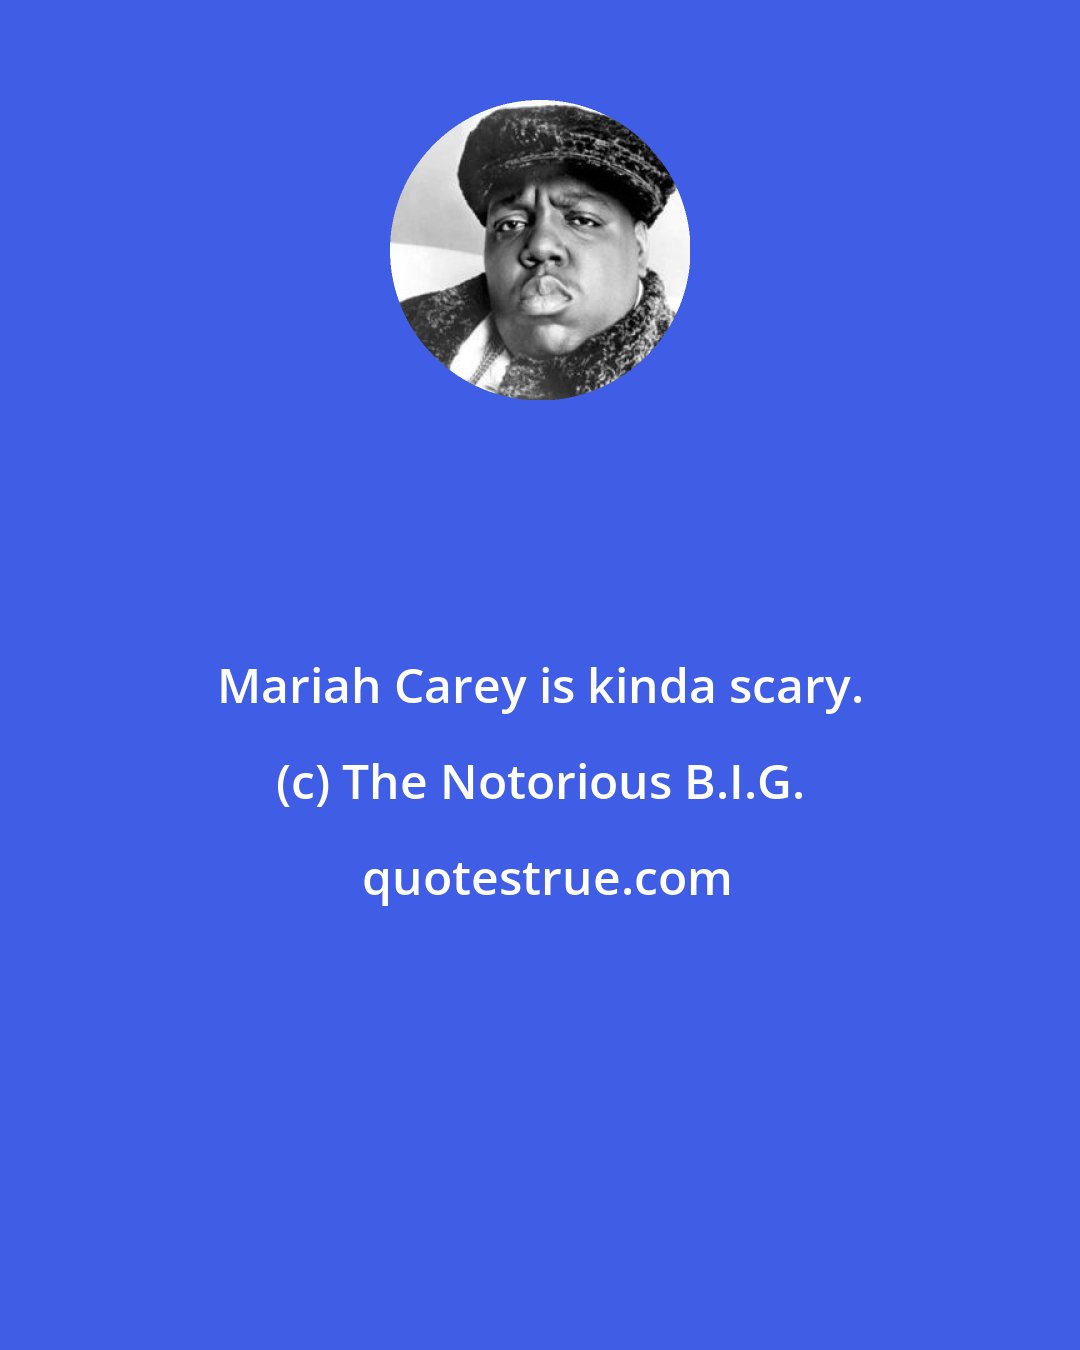 The Notorious B.I.G.: Mariah Carey is kinda scary.